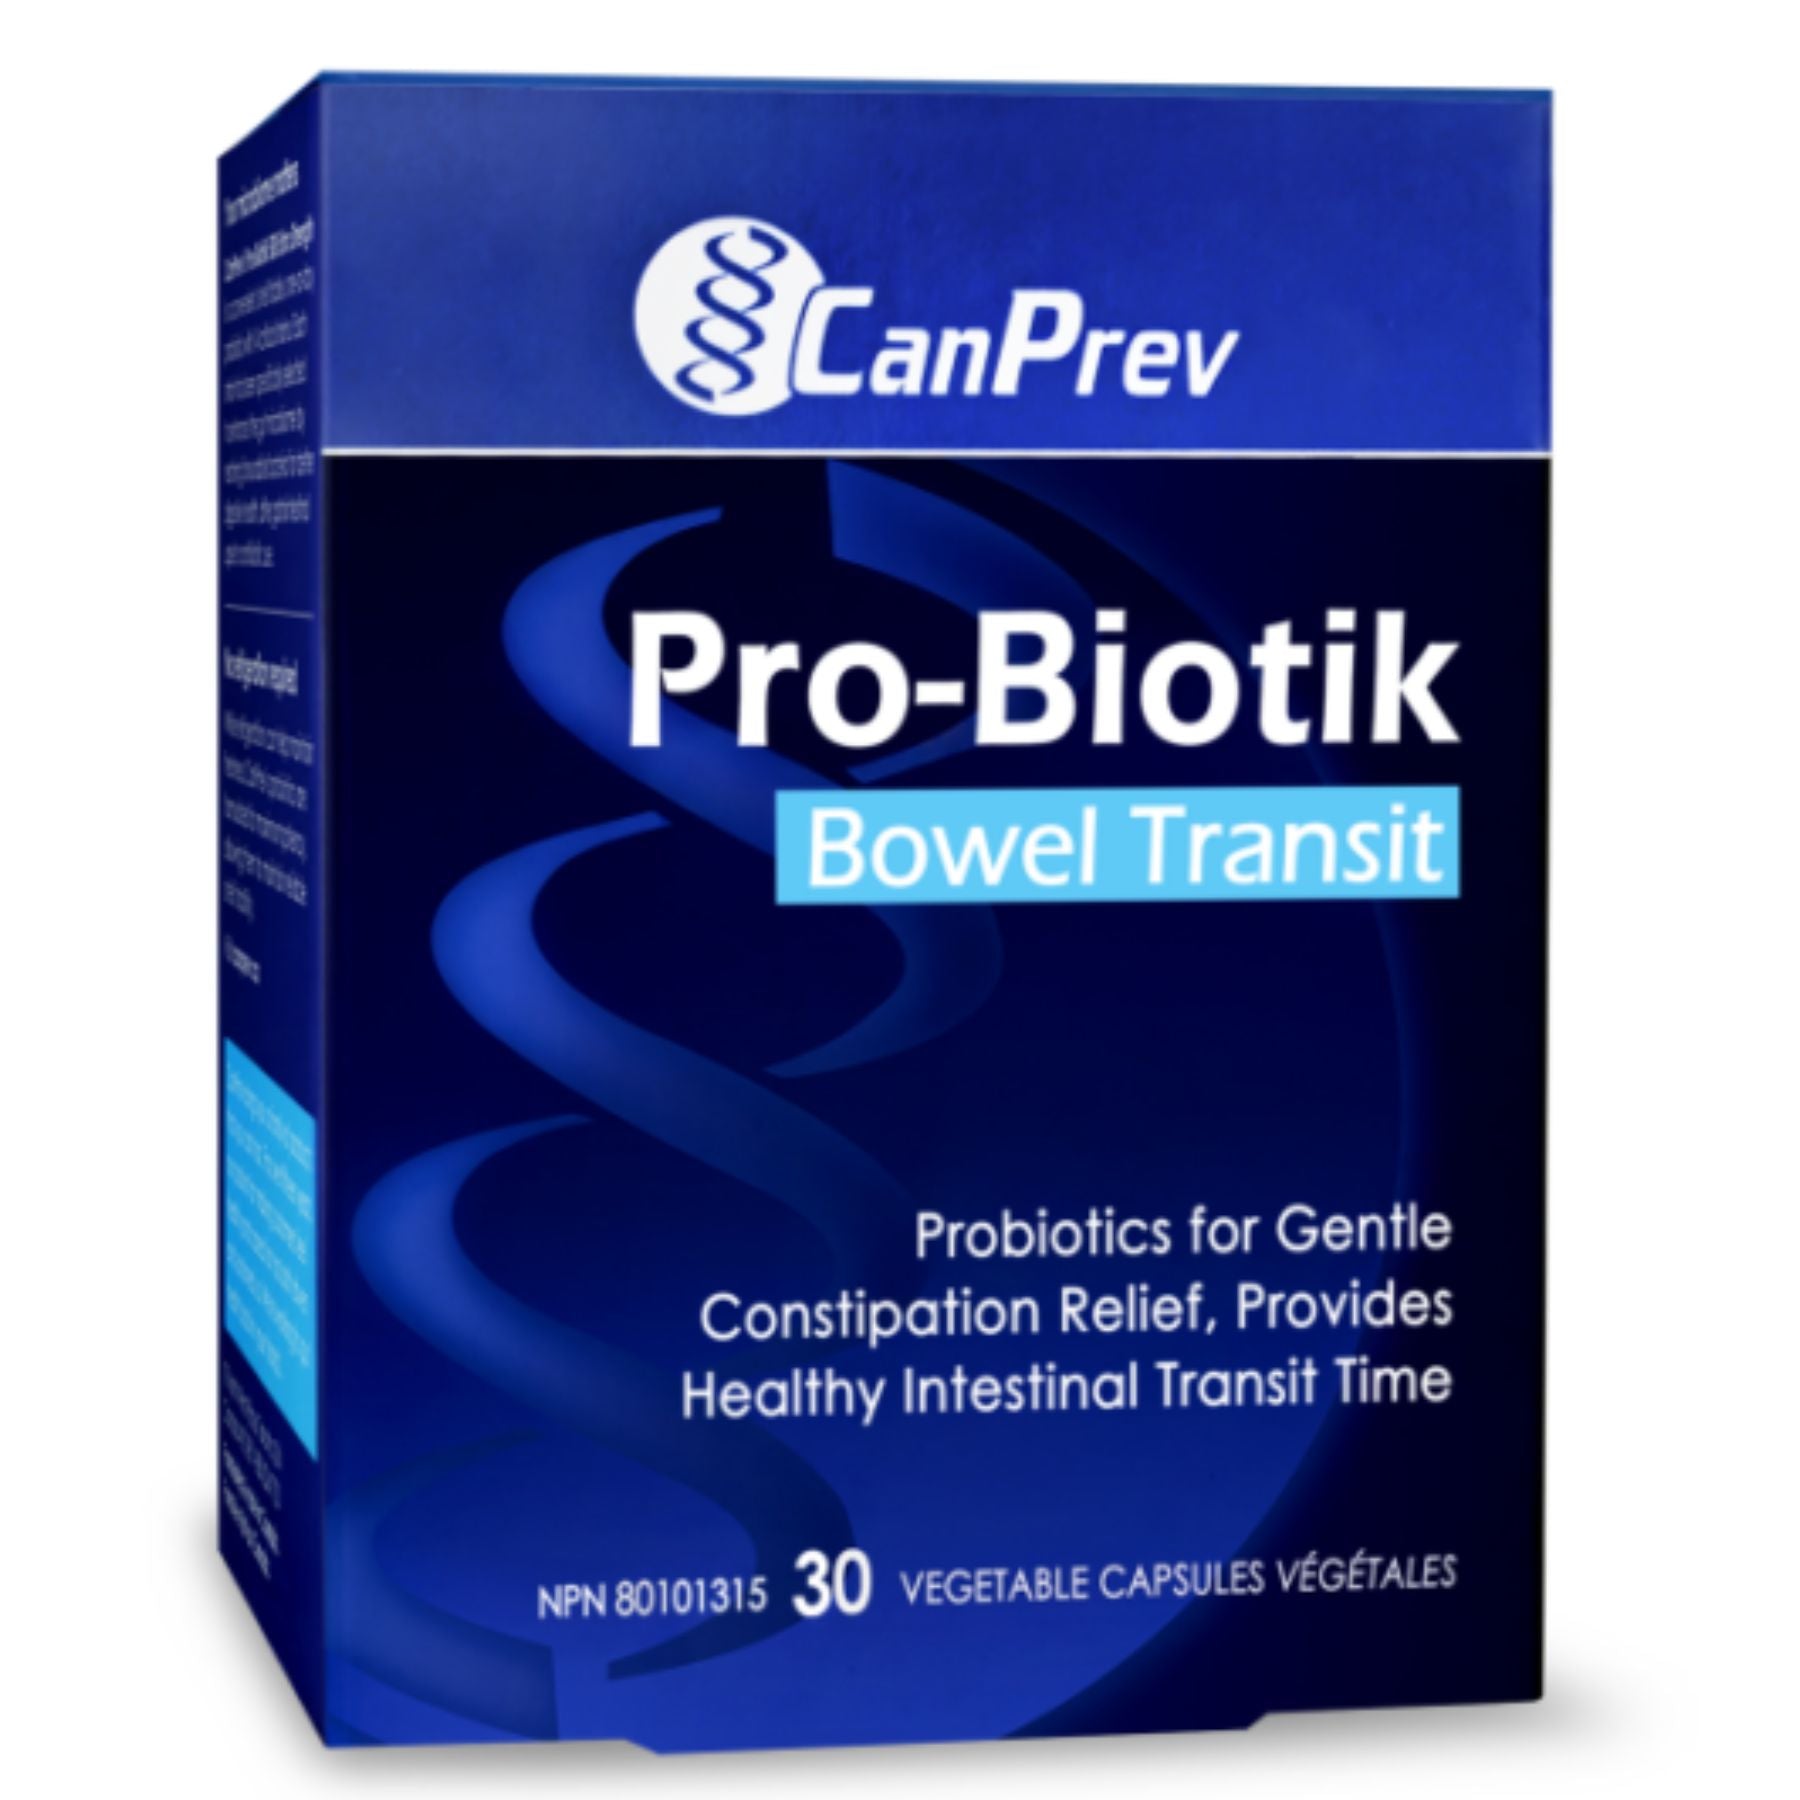 Canprev Pro-Biotik Bowel Transit 30s